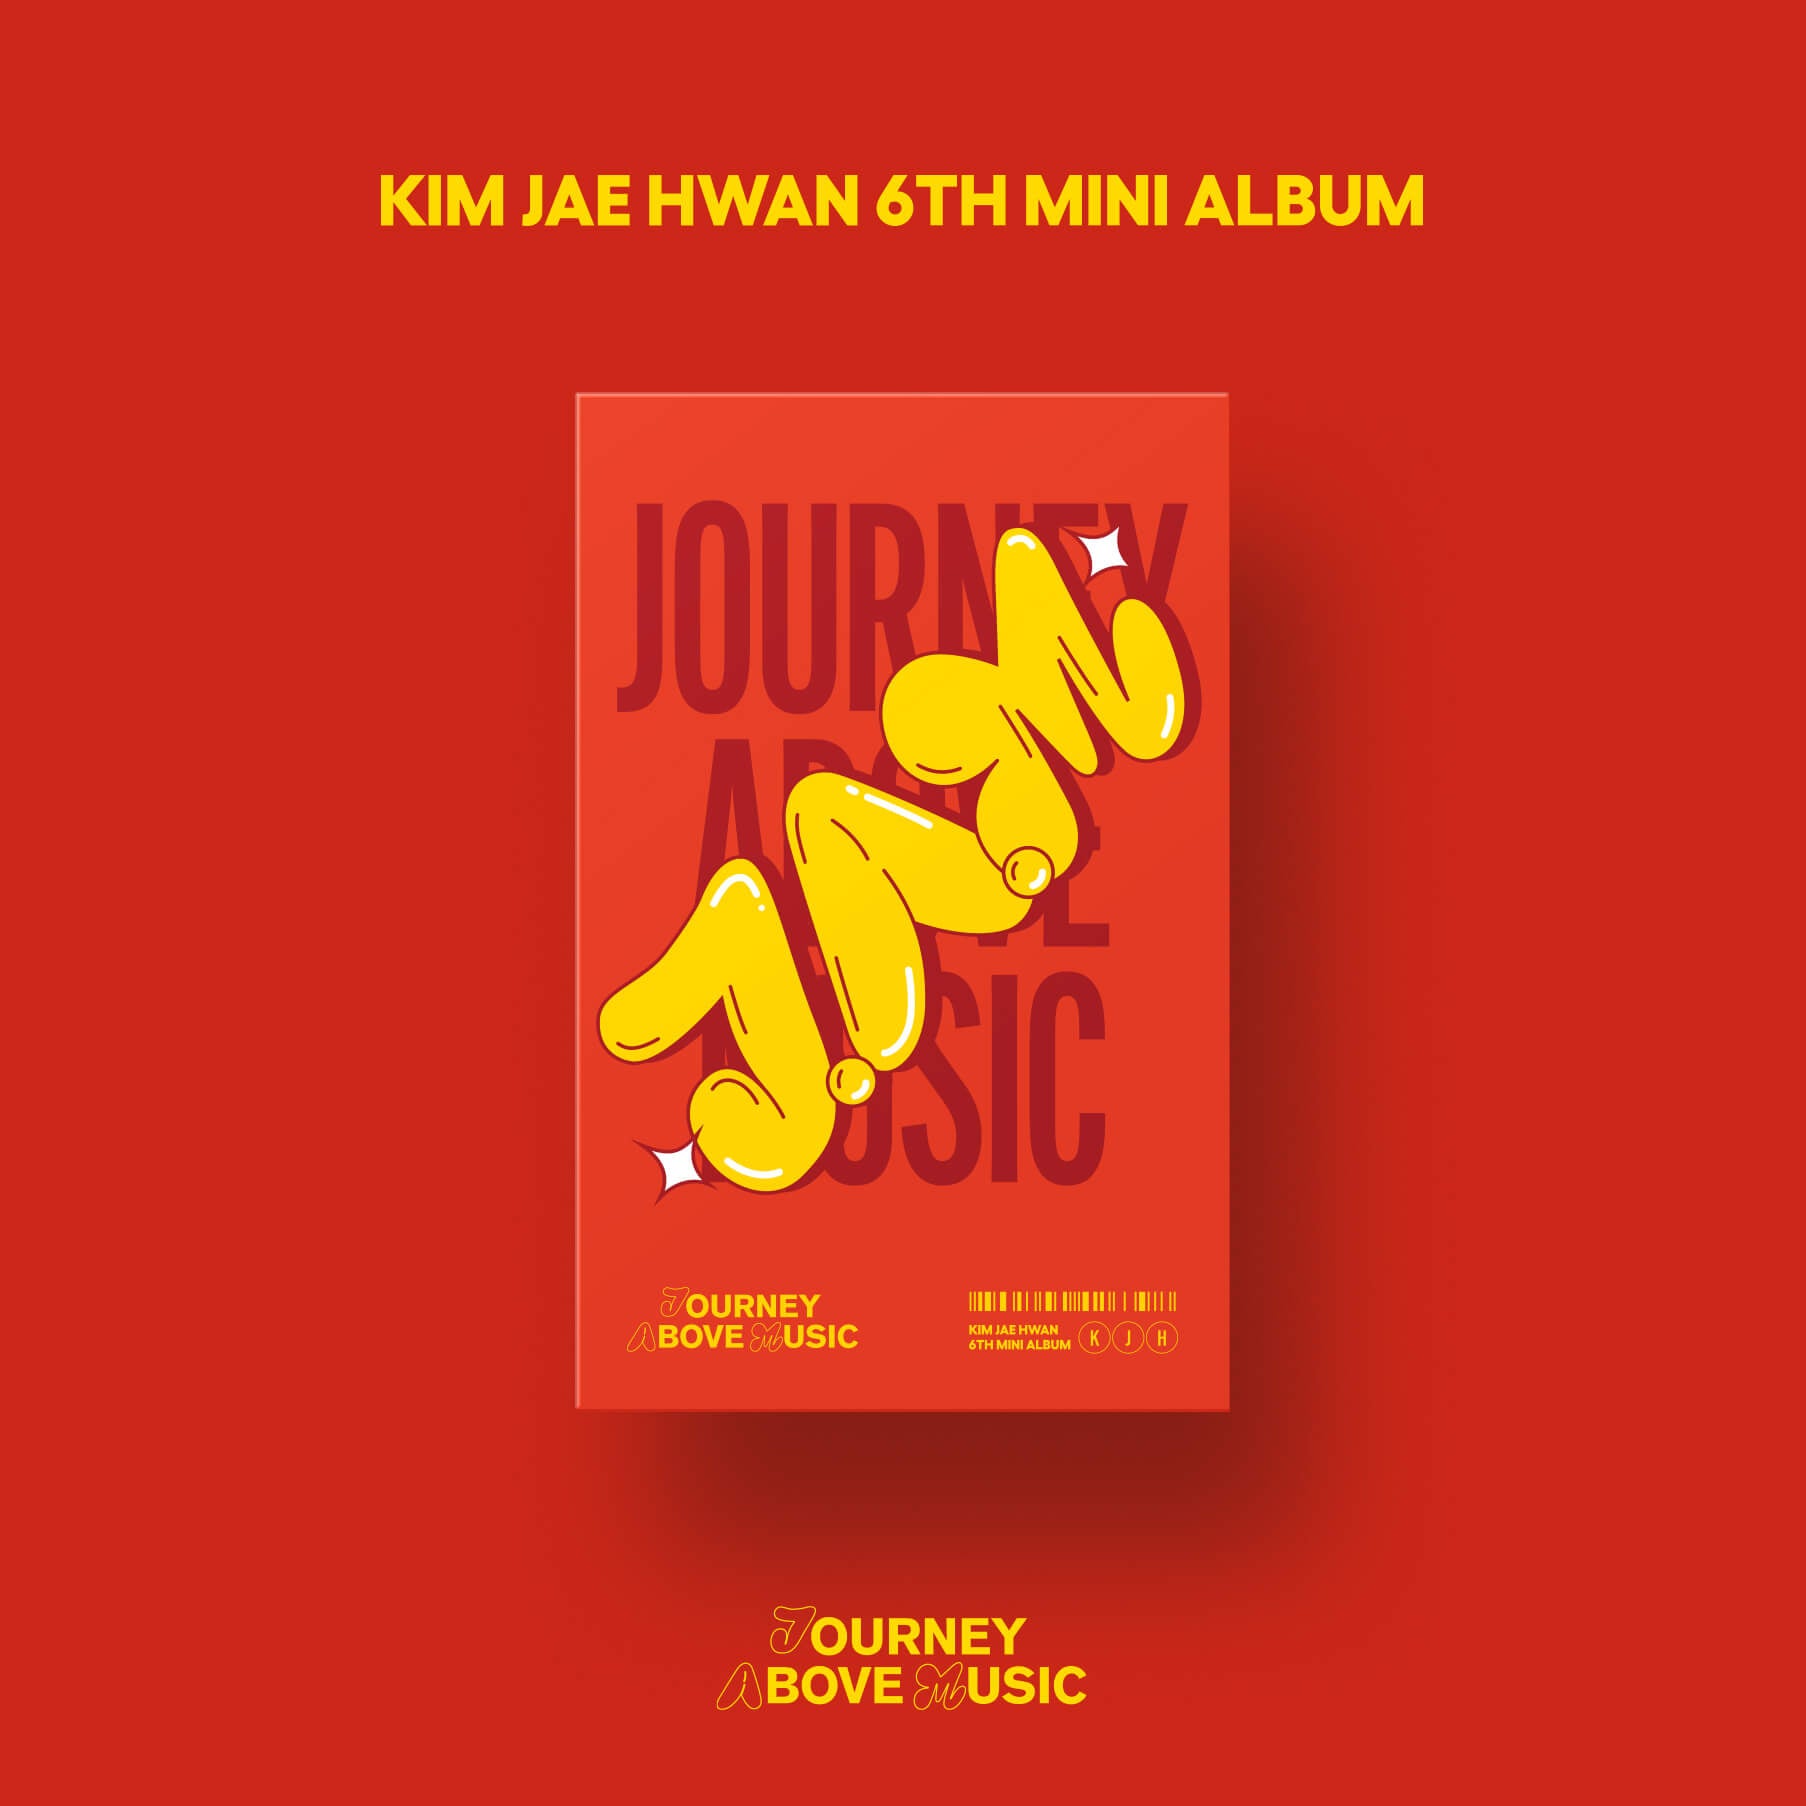  Kim Jae Hwan 6th Mini Album J.A.M (Journey Above Music) - Platform Version